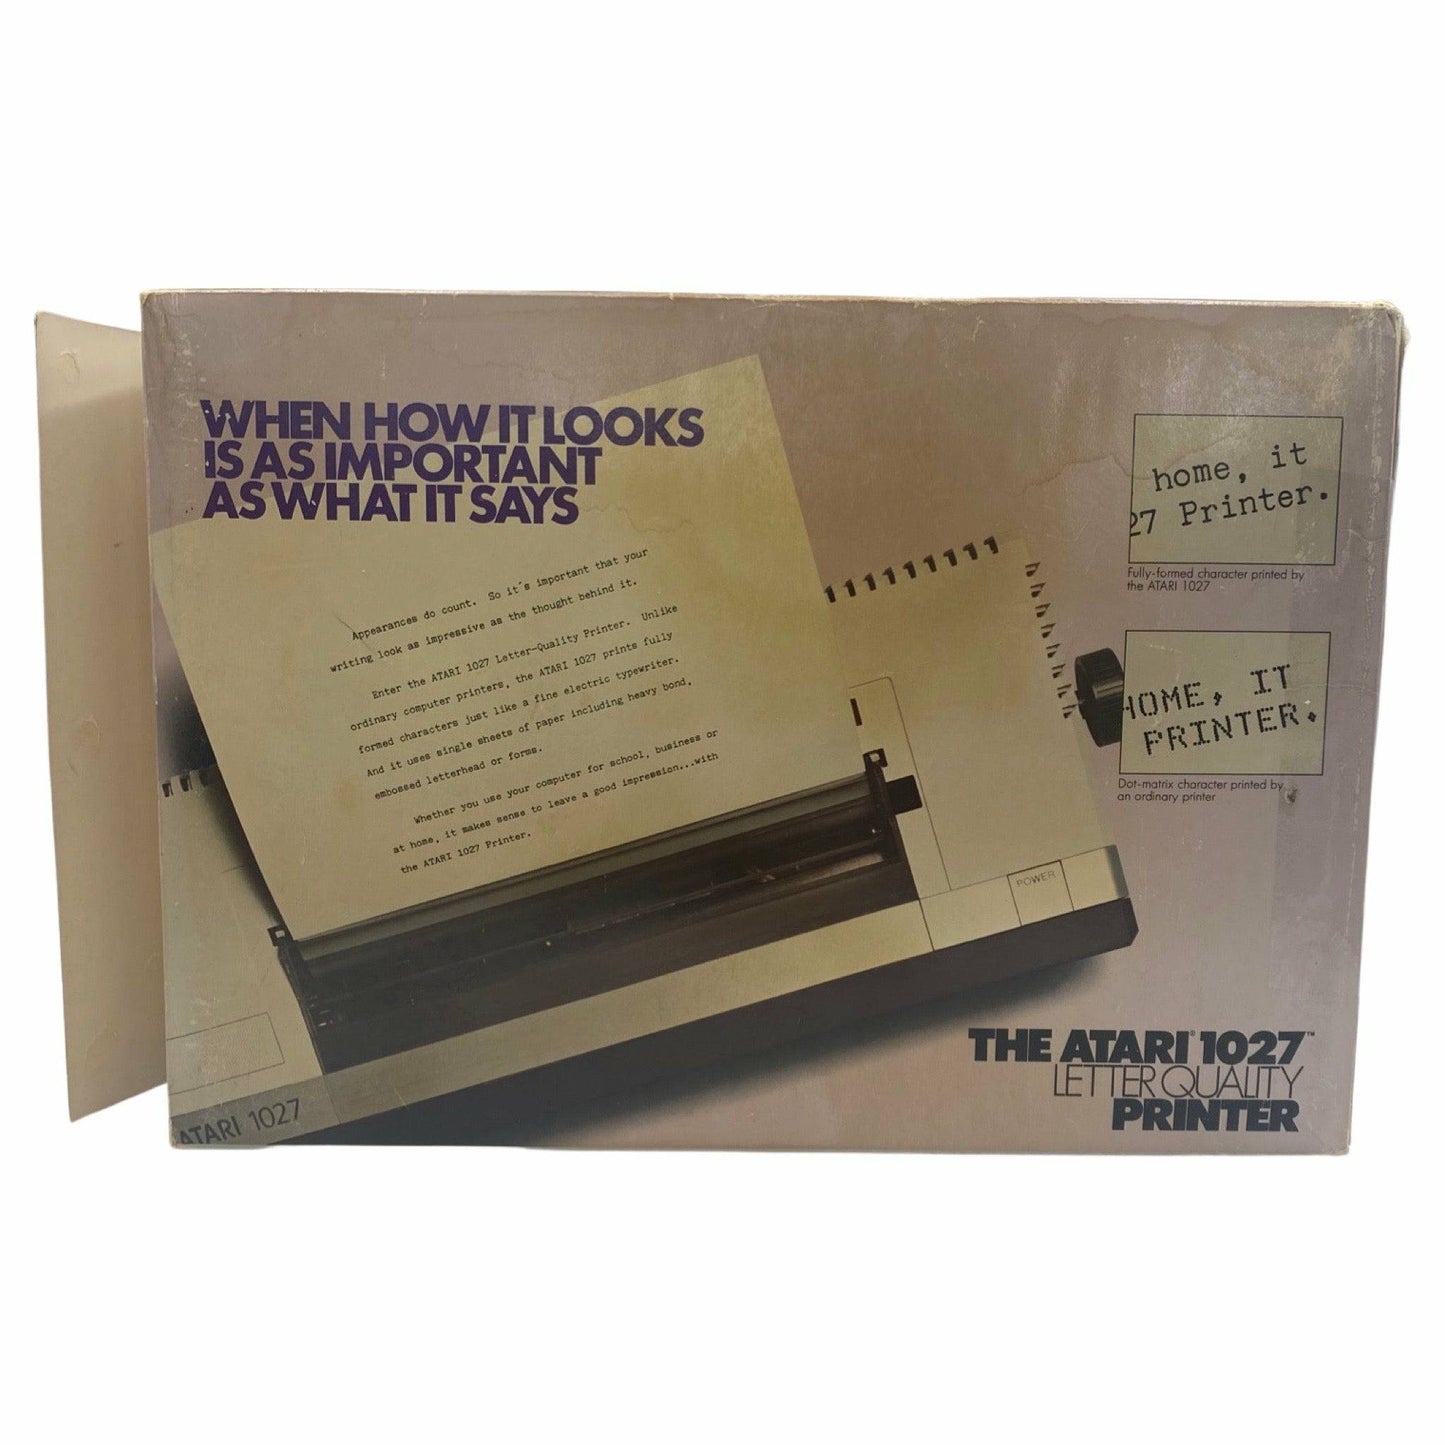 Atari 1027 Letter Quality Printer